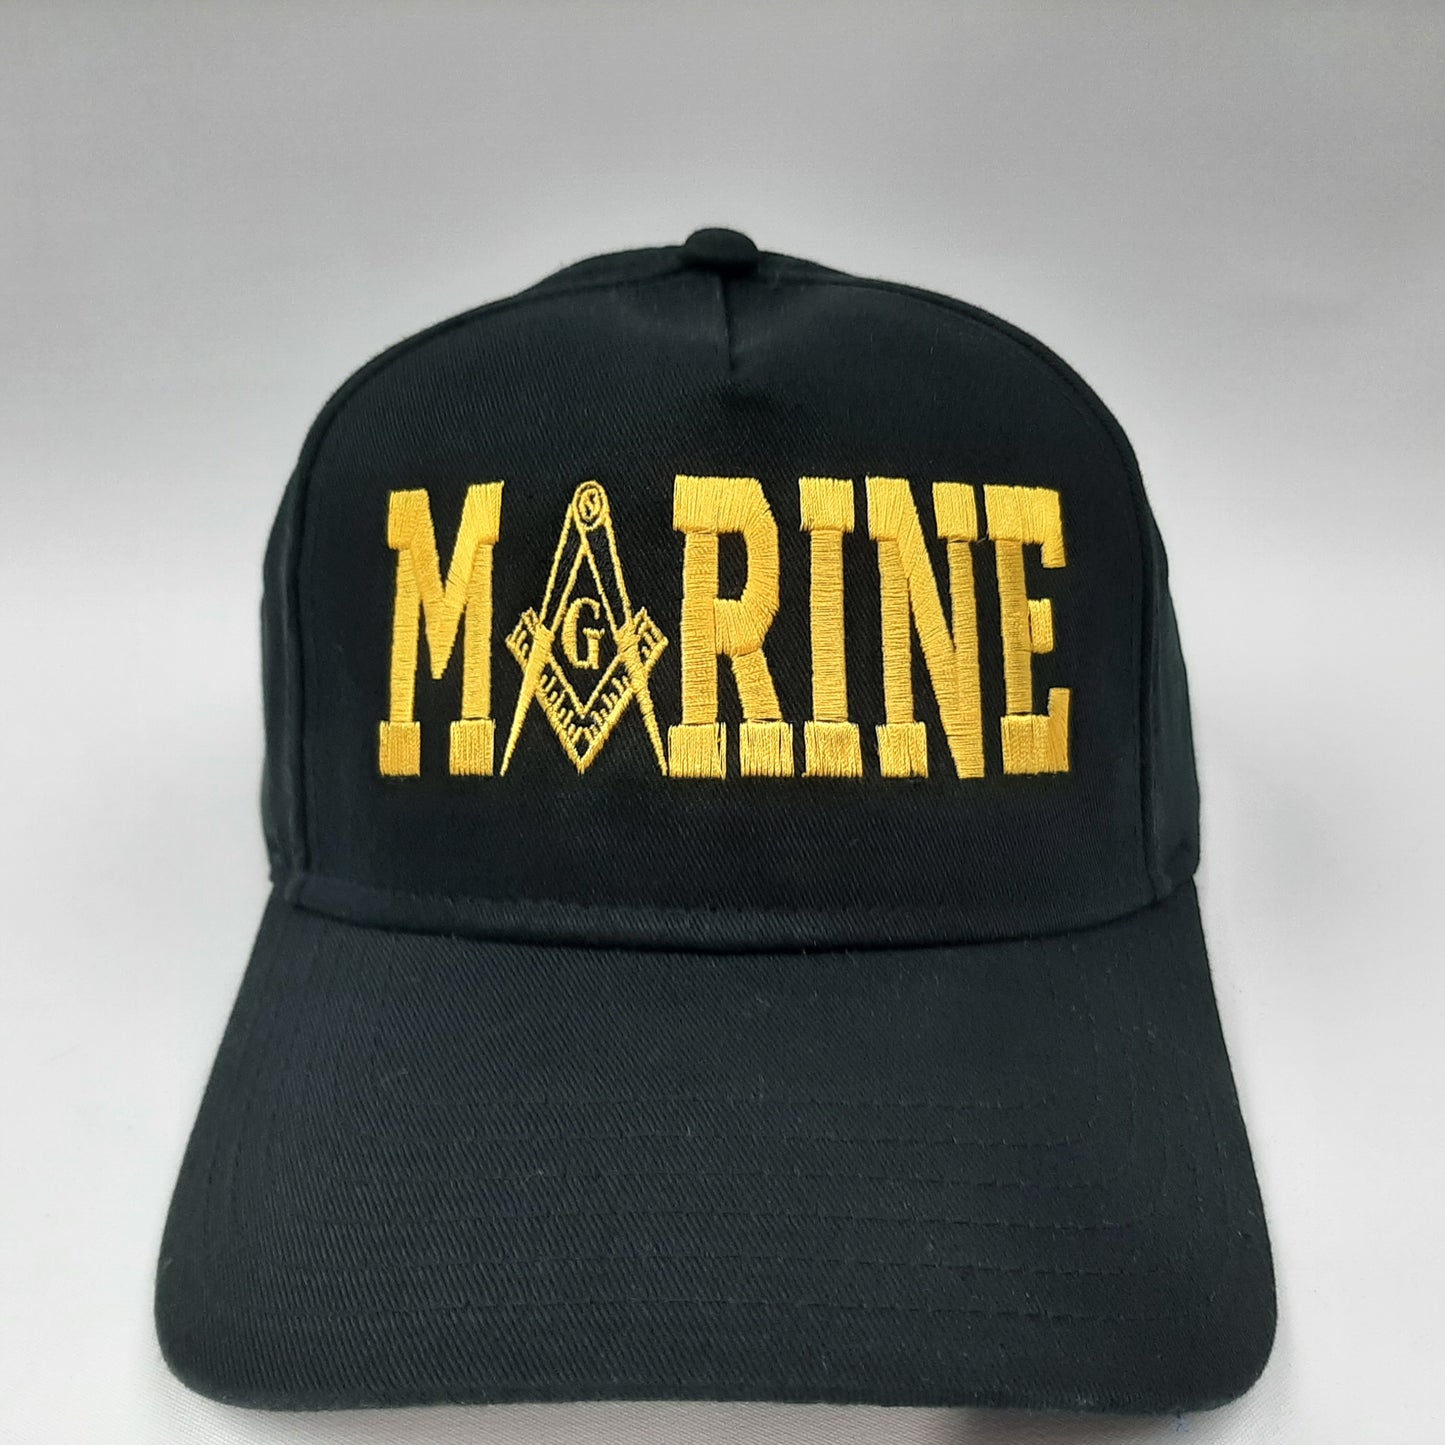 Mason U.S. Marines Masonic Freemasonry Cap Hat Black 100 % Cotton